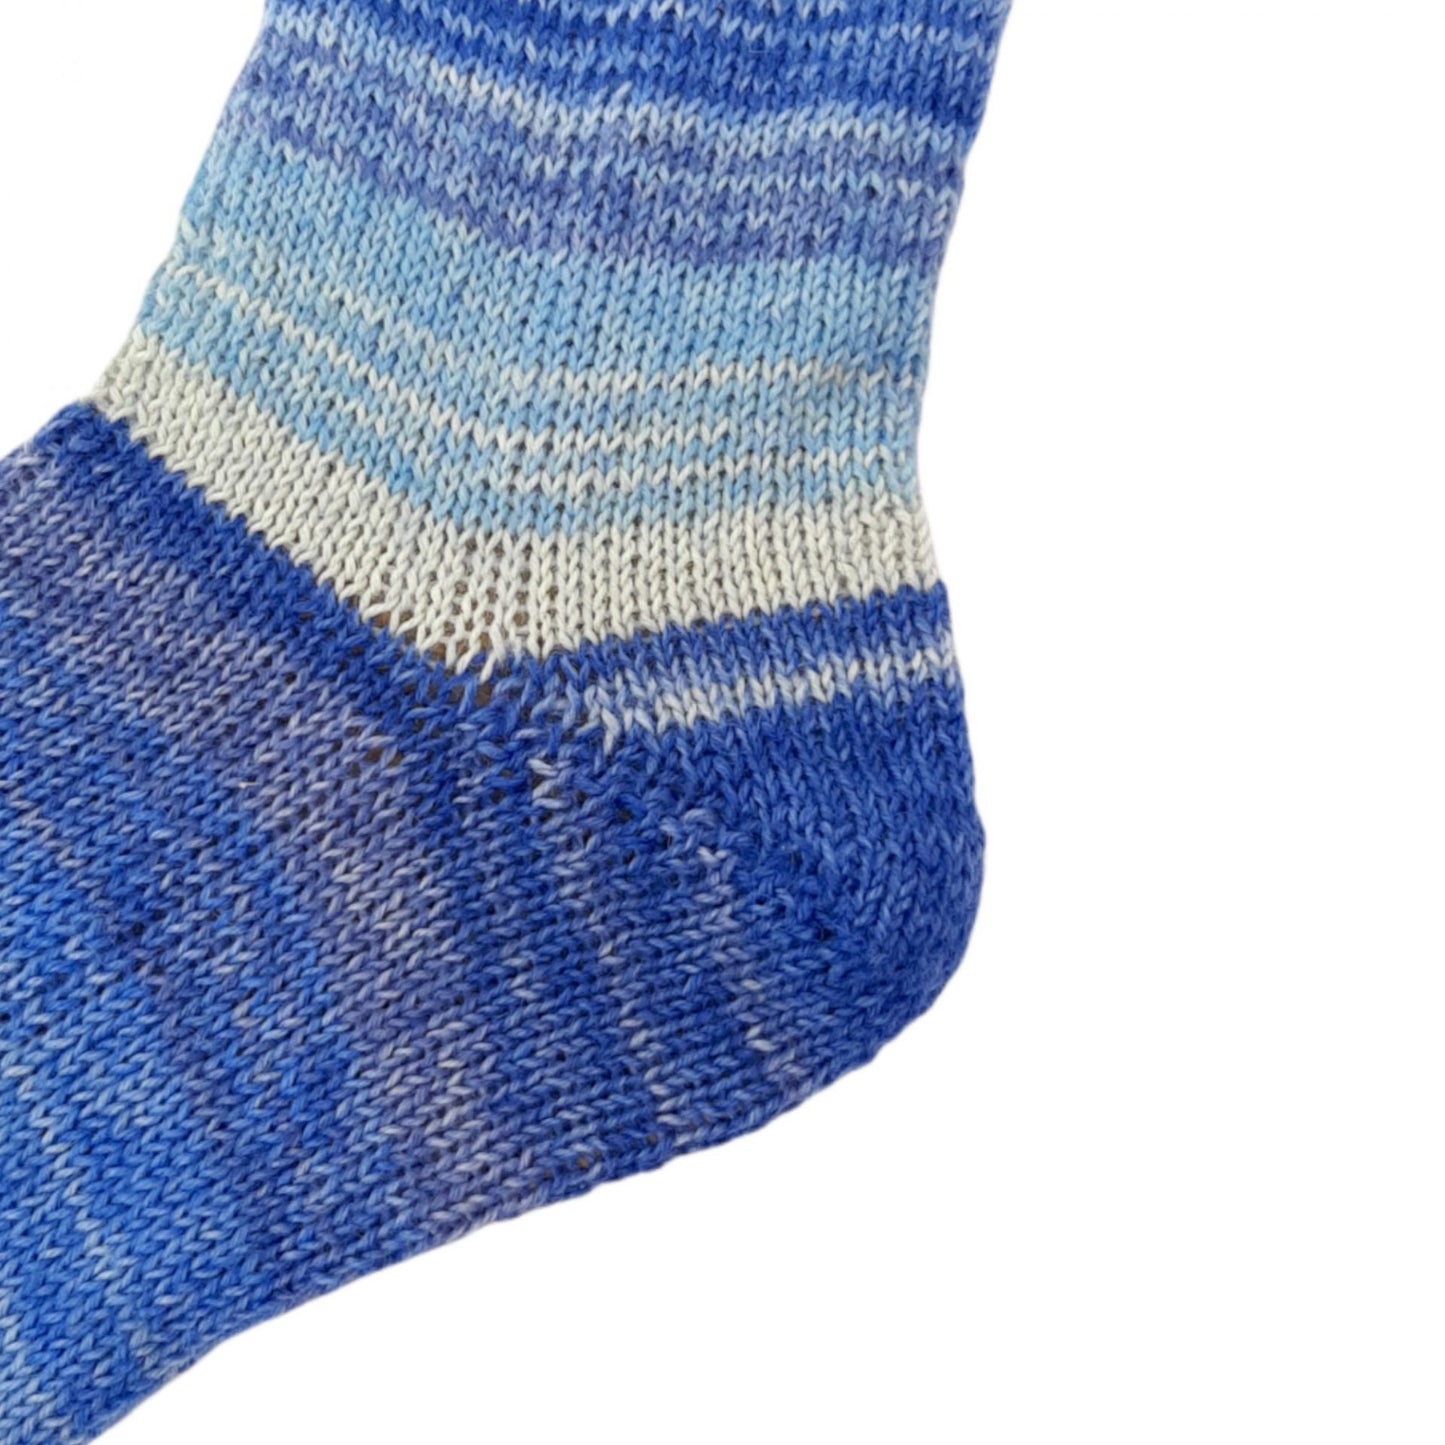 Handgestrickte Socken hellblau-blau-dunkelblau